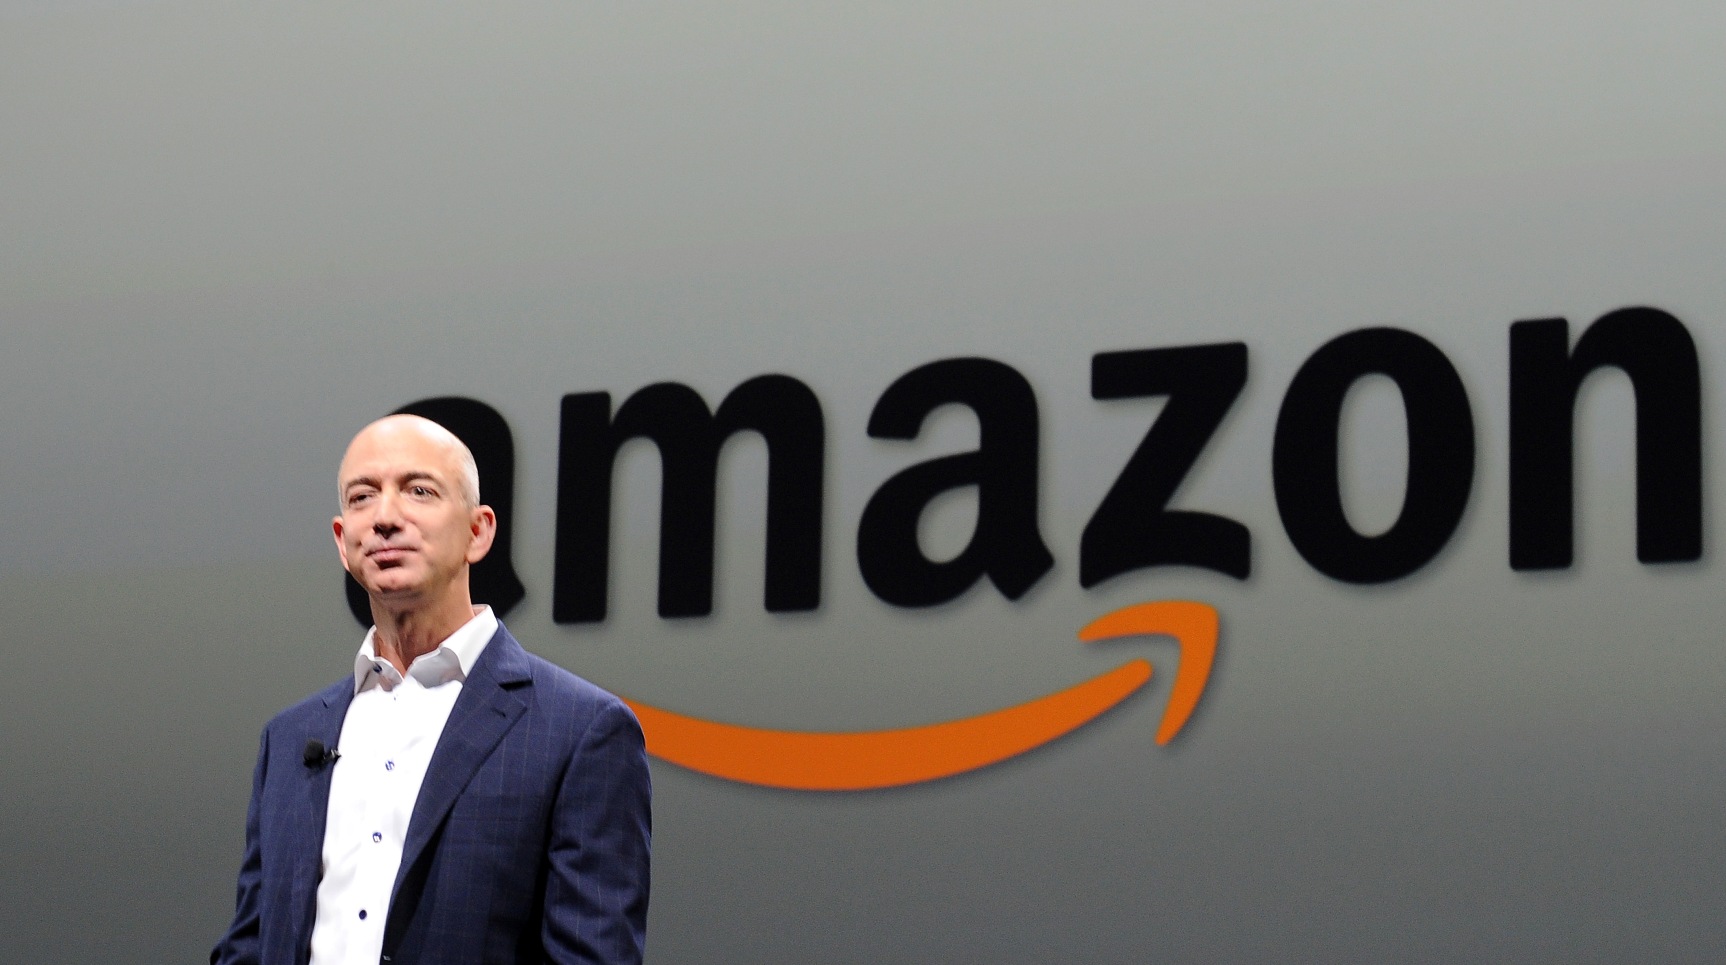 Jeff Bezos CEO de Amazon